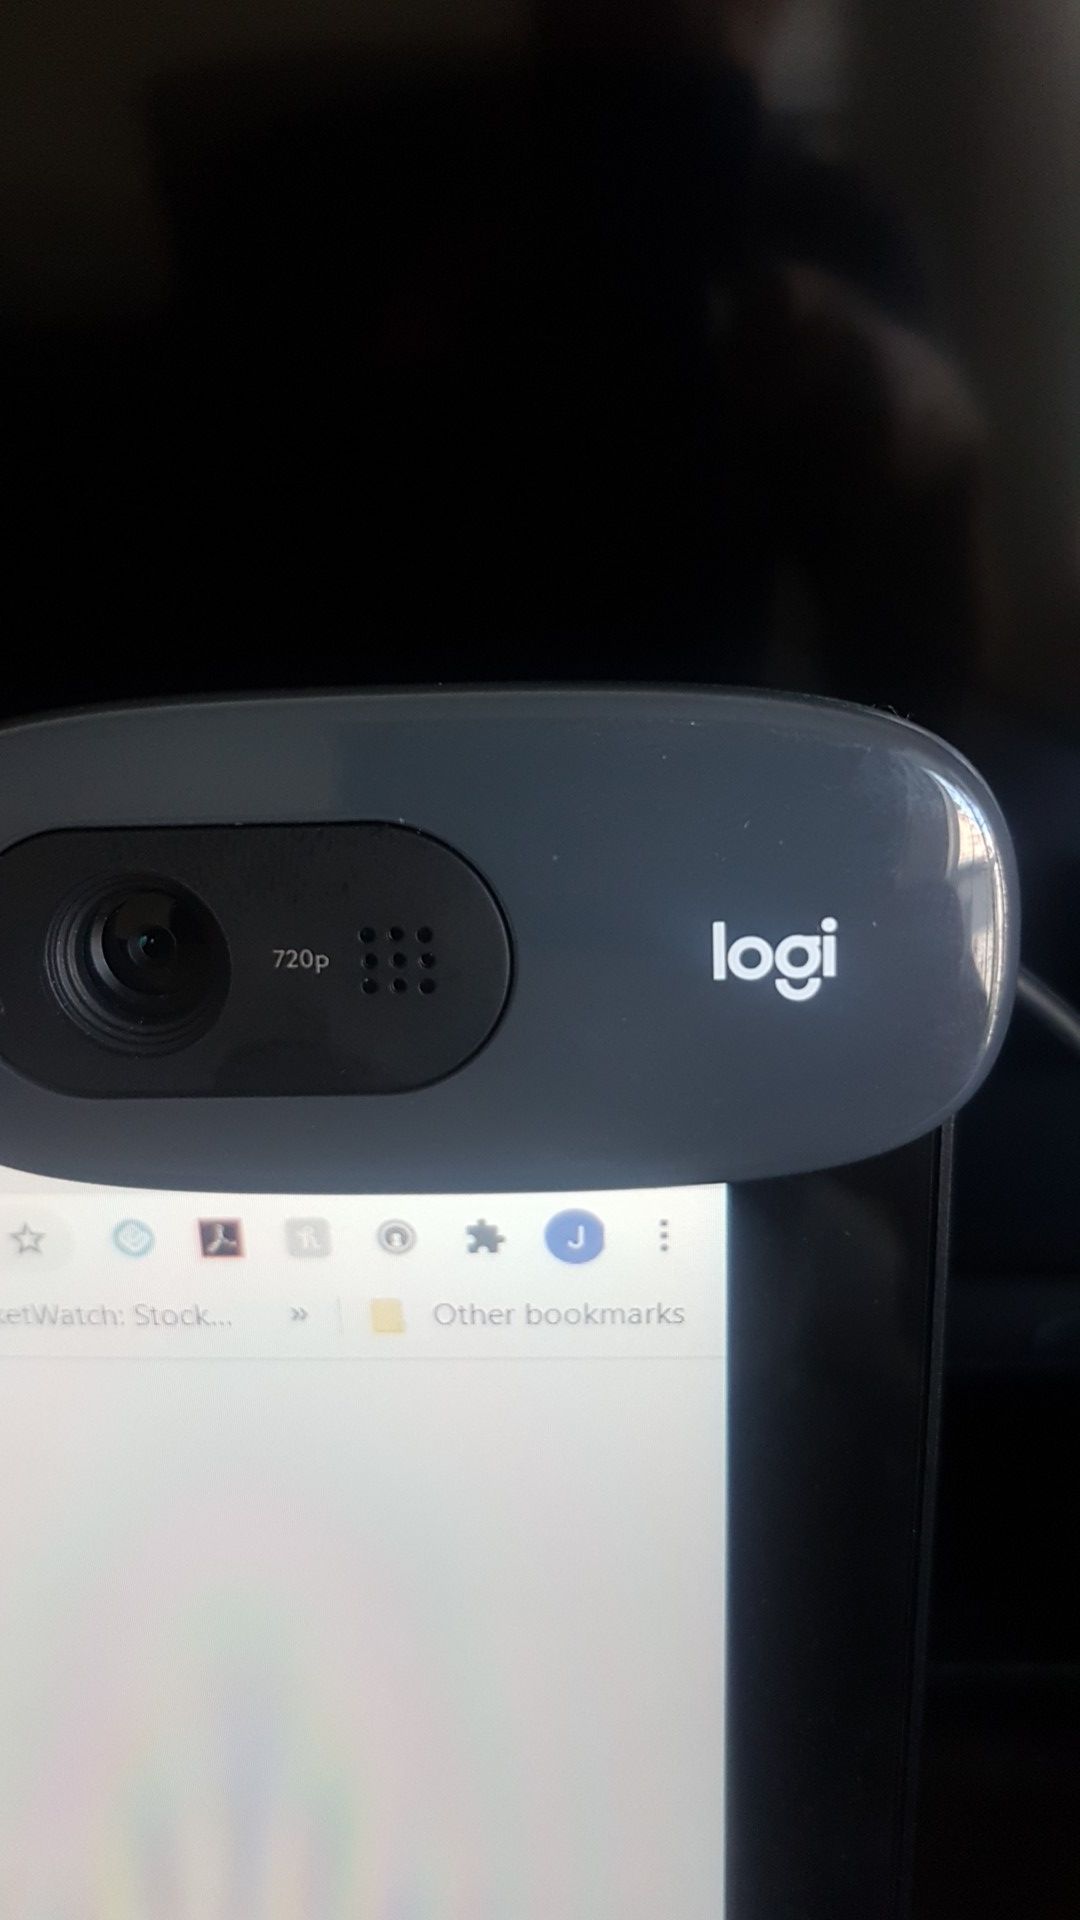 Logi 720p USB camera